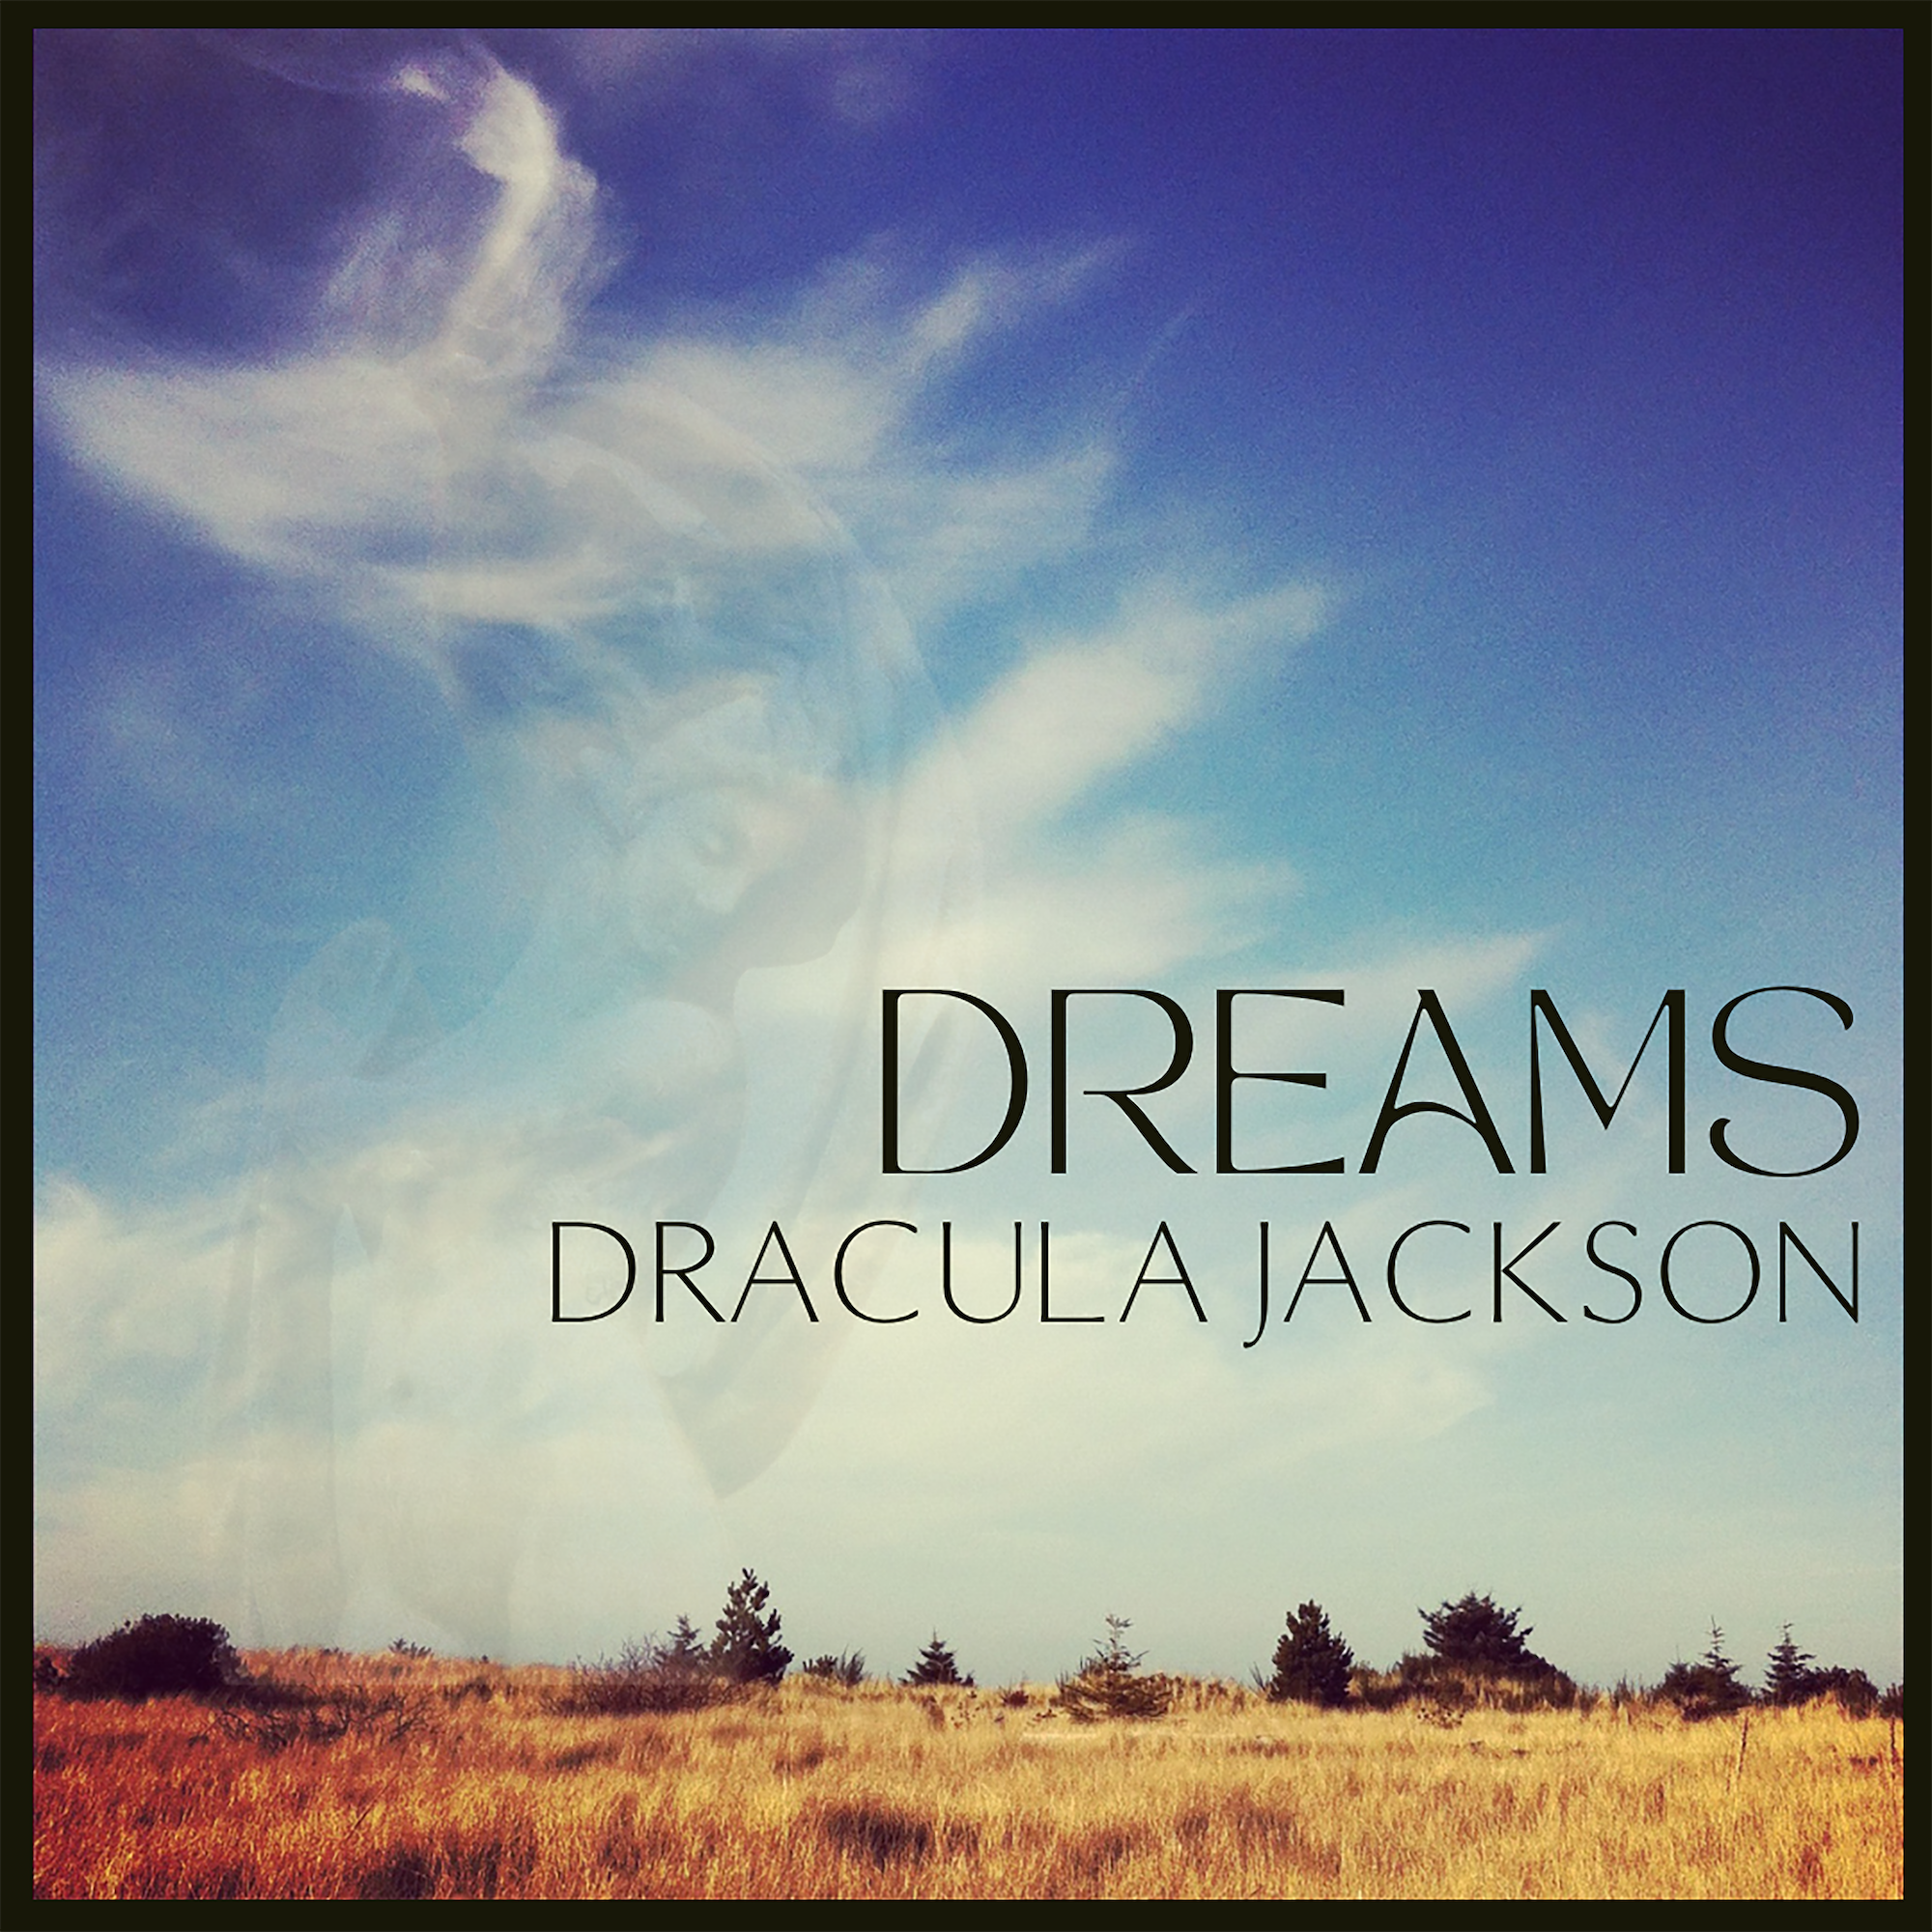 "Dreams" by Dracula Jackson